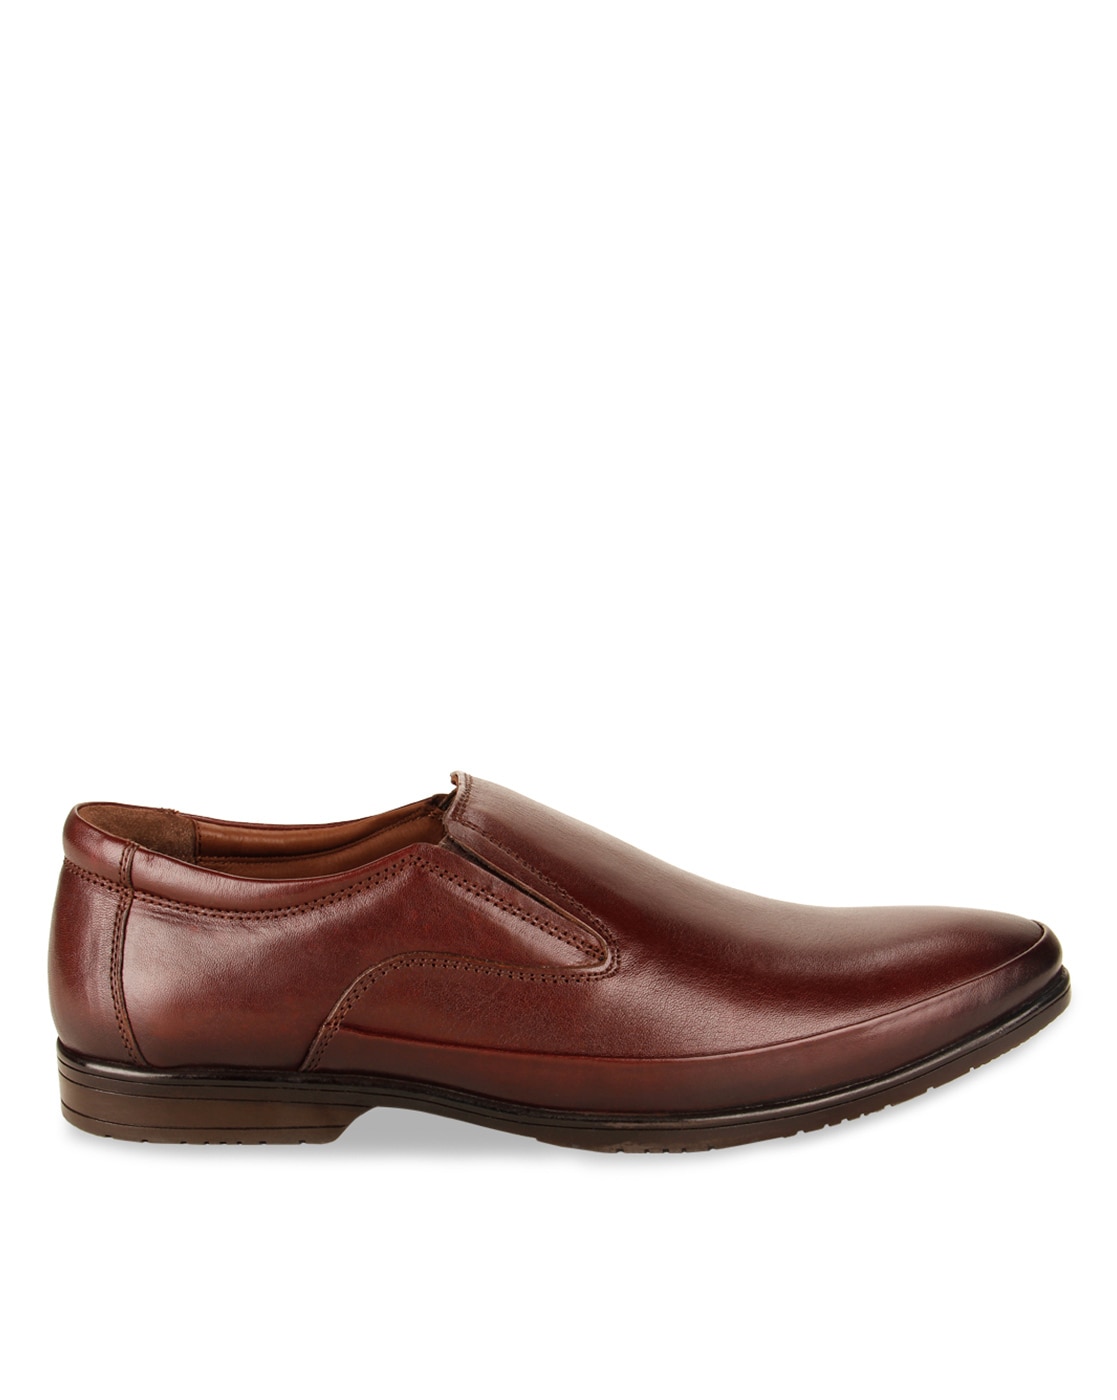 Buy Brown Formal Shoes for Men by REGAL Online | Ajio.com